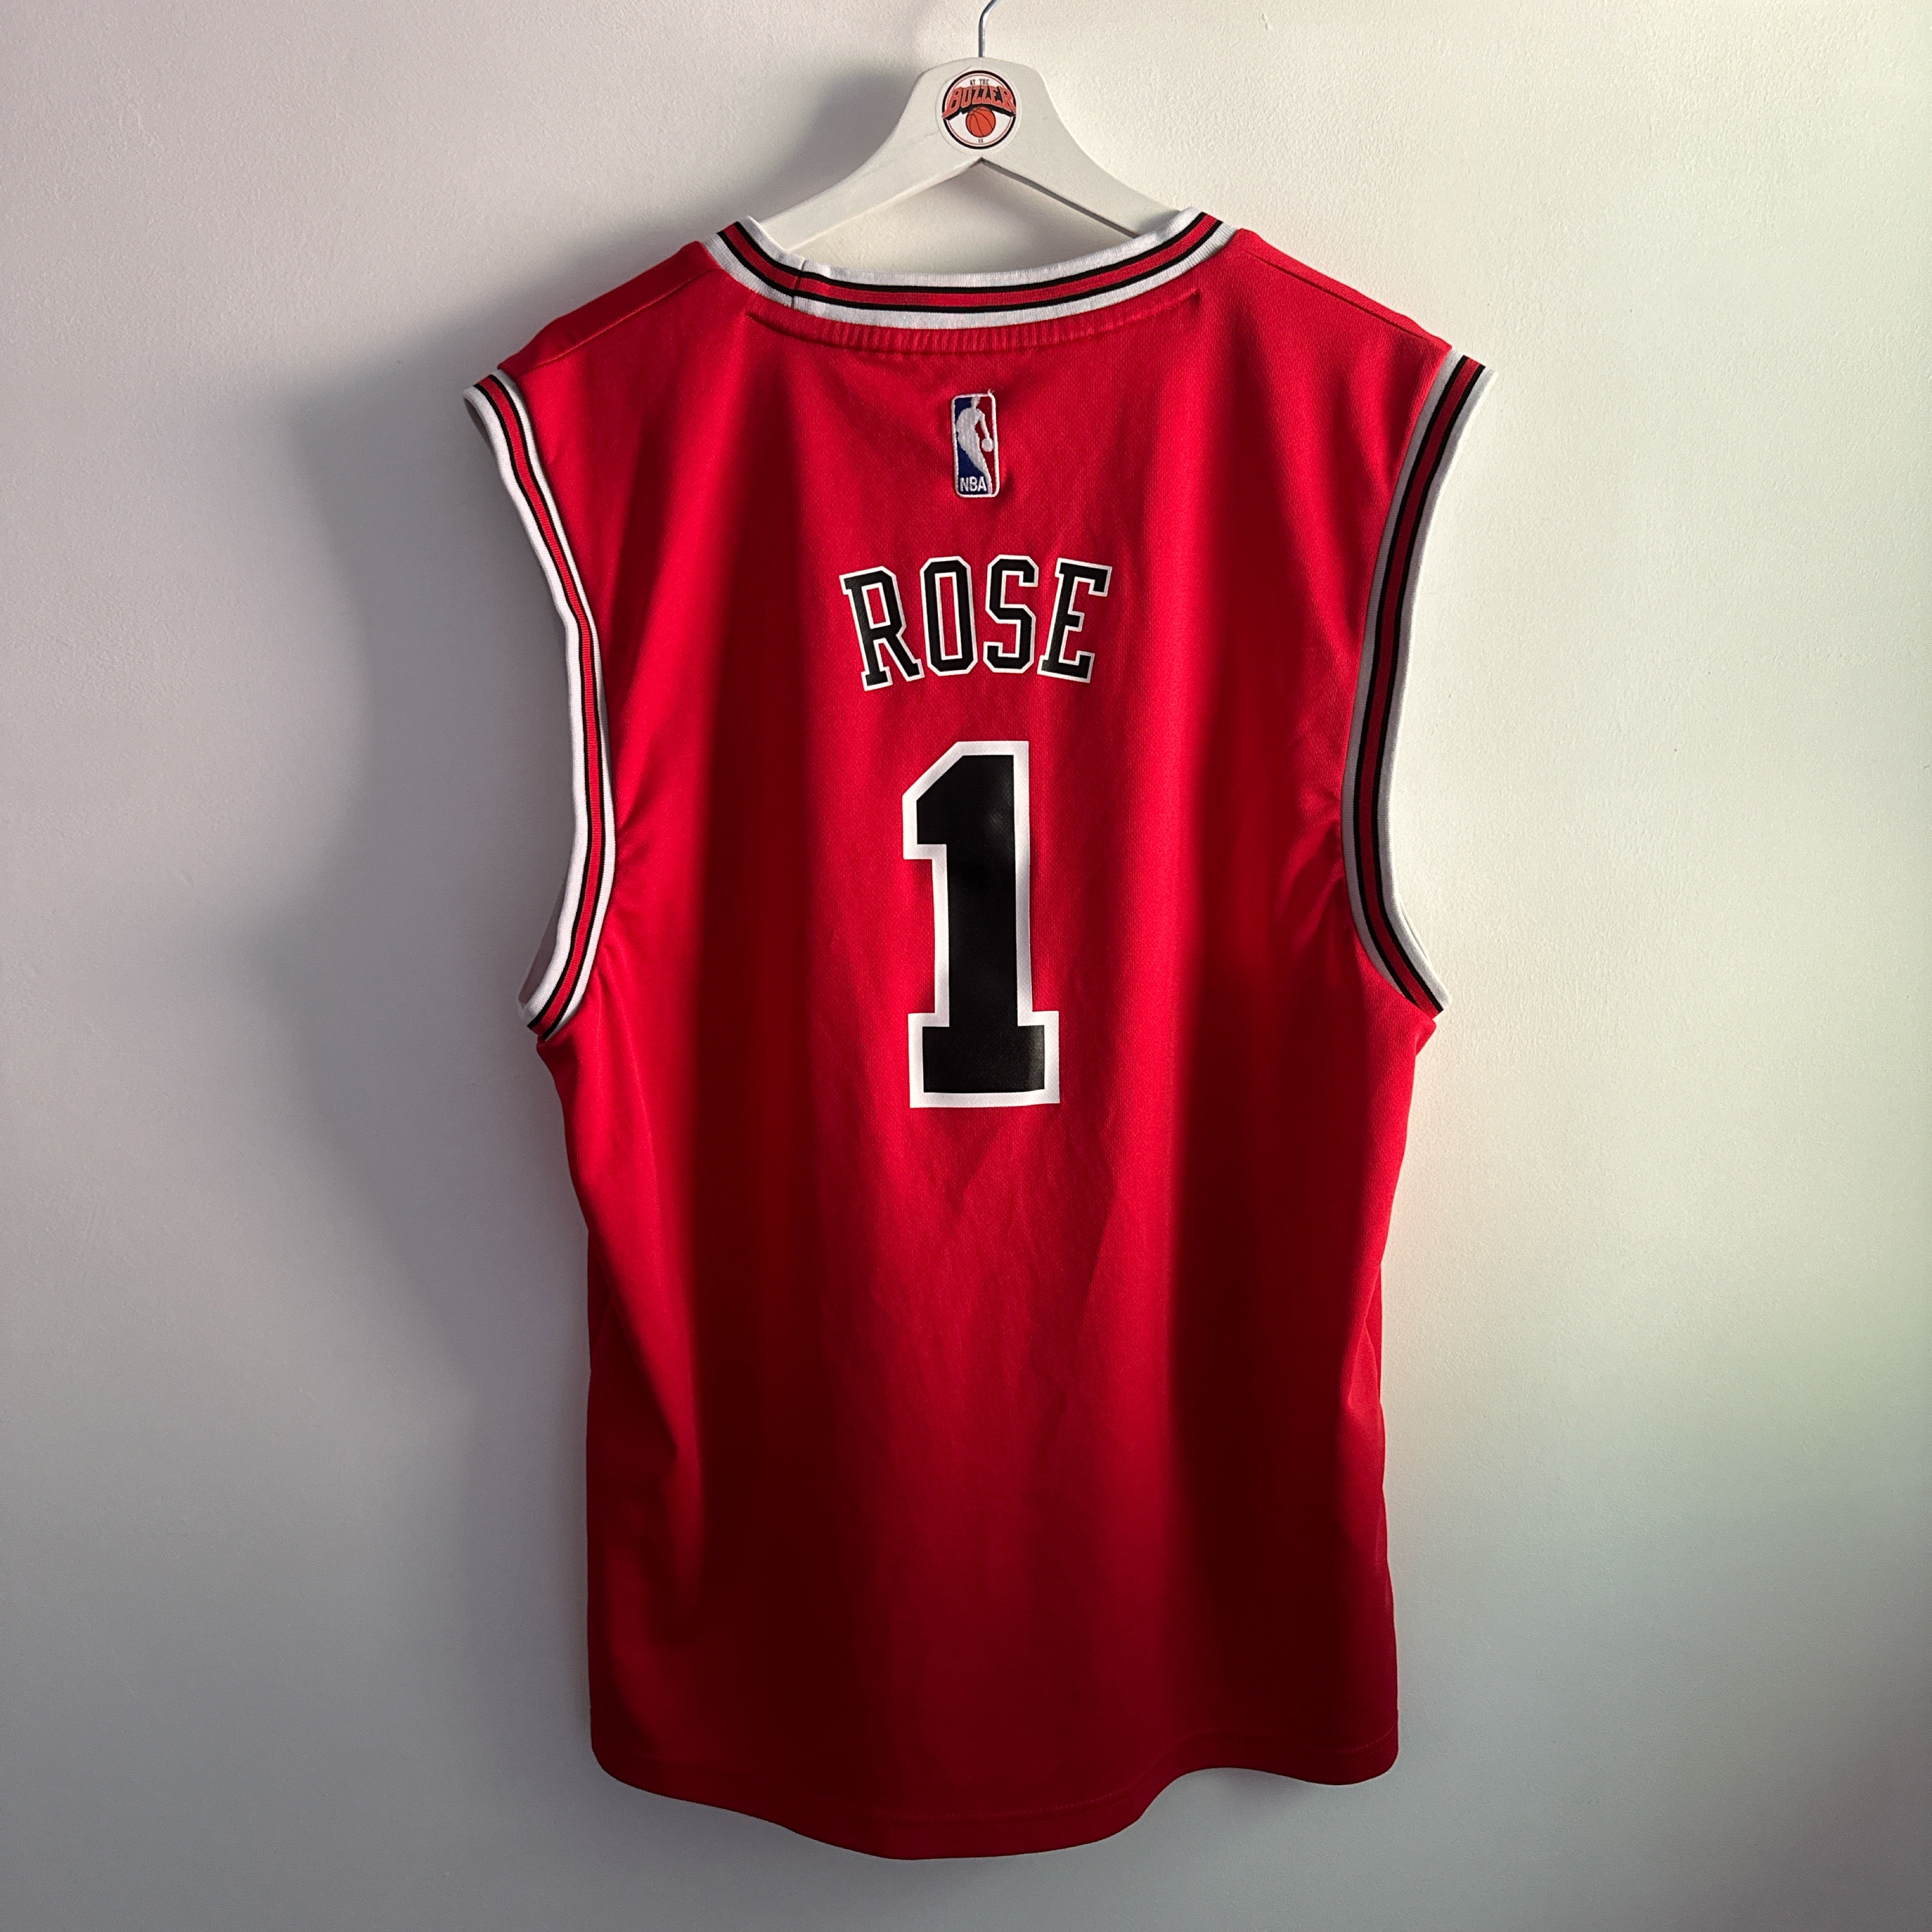 Chicago Bulls Derrick Rose Adidas jersey - Large